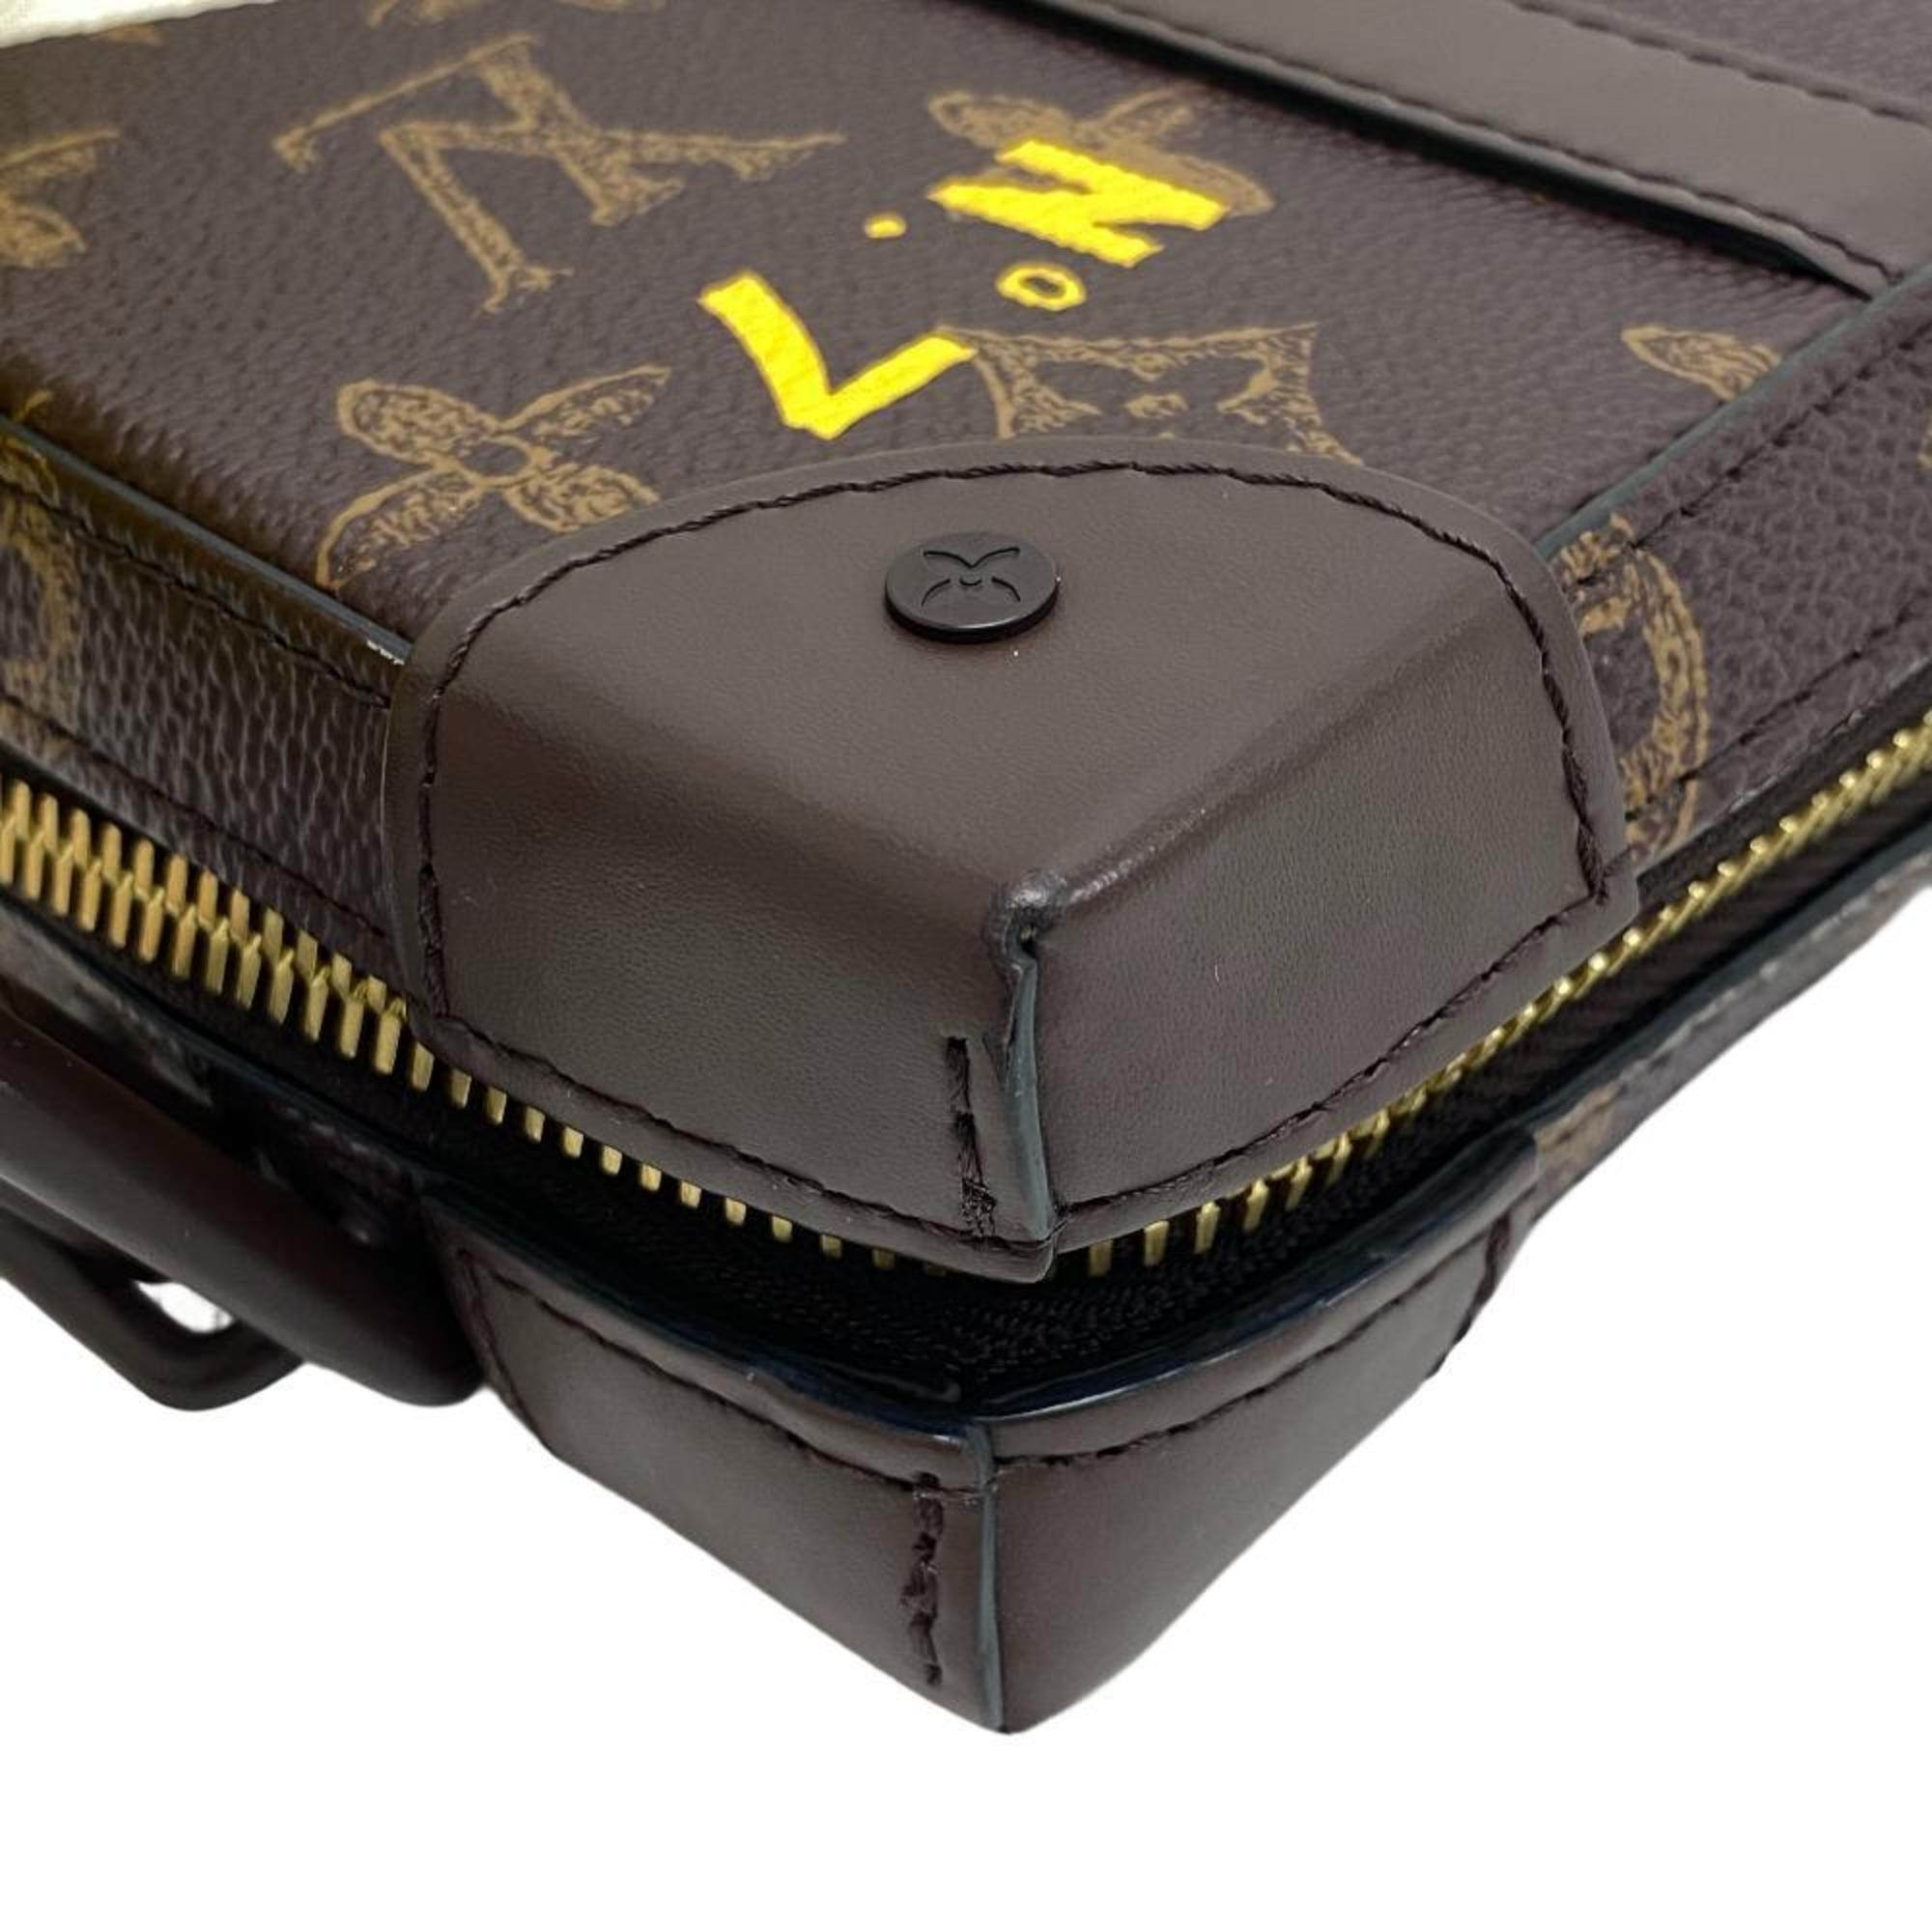 LOUIS VUITTON M81246 Soft Trunk Wallet Monogram Shoulder Bag Brown Women's Z0005827